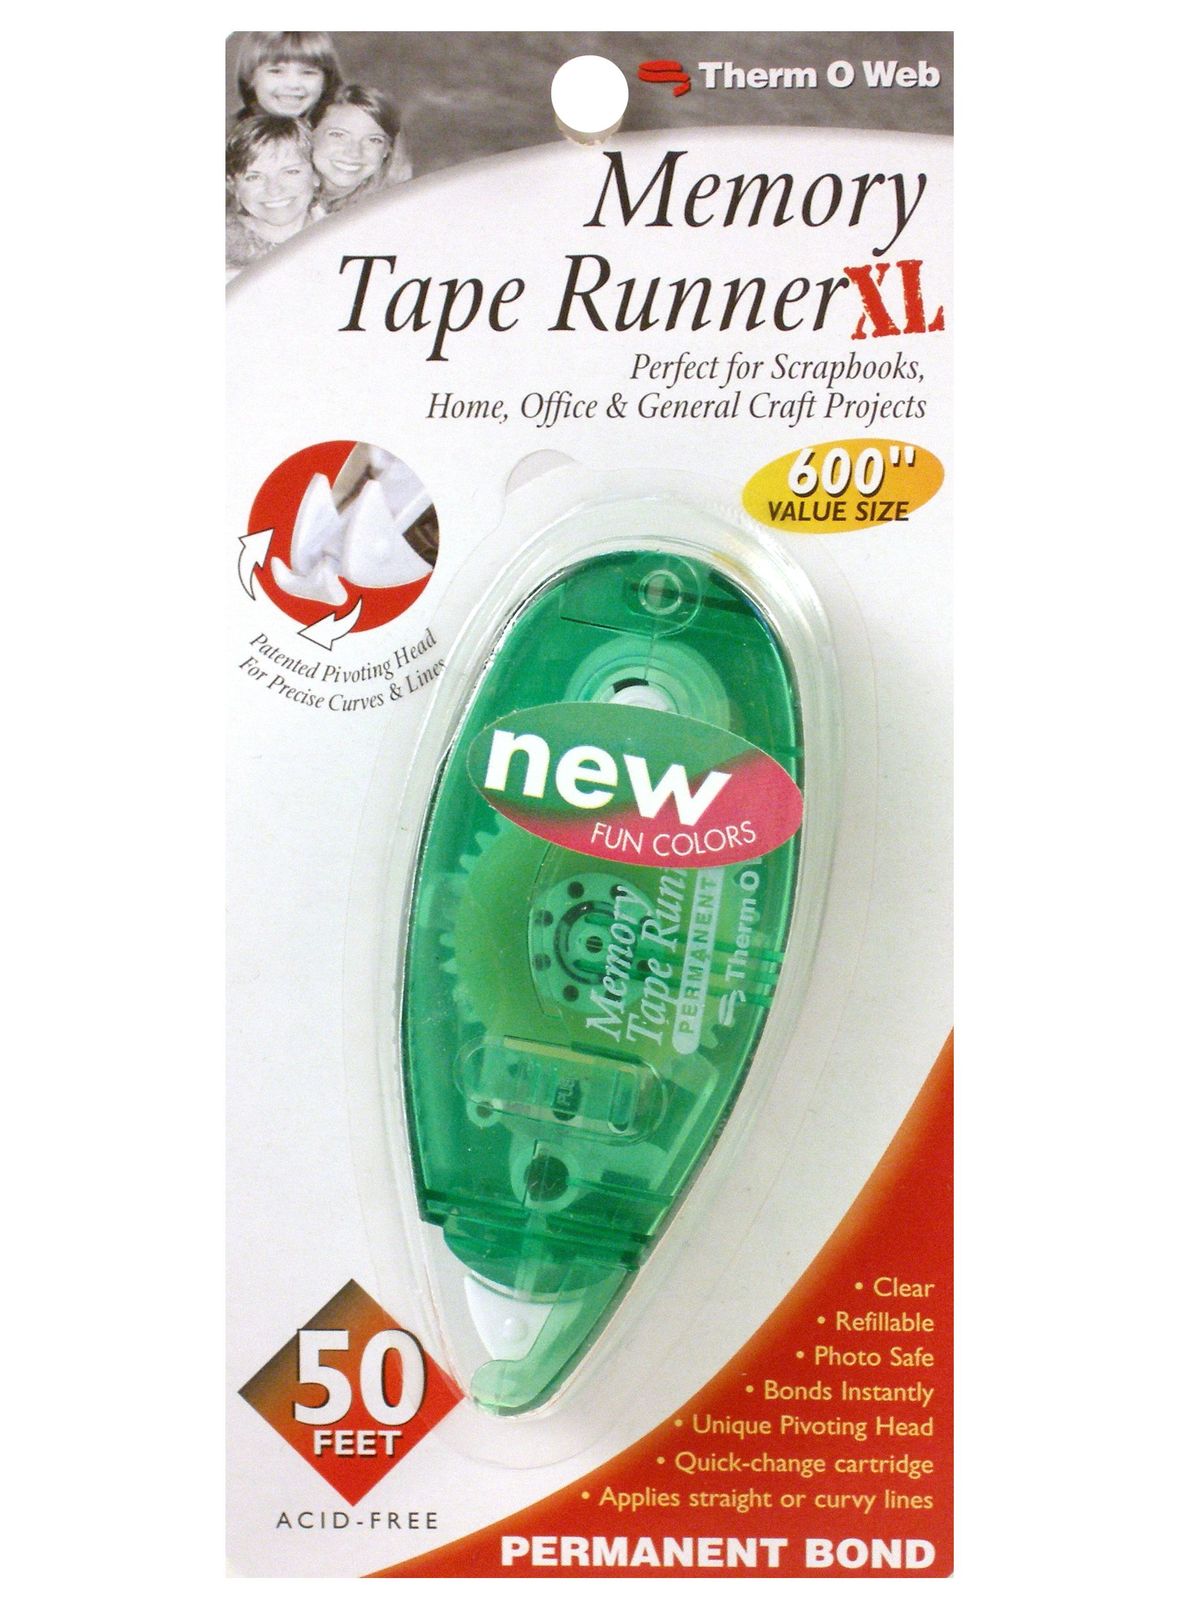 Tape Runner XL Each